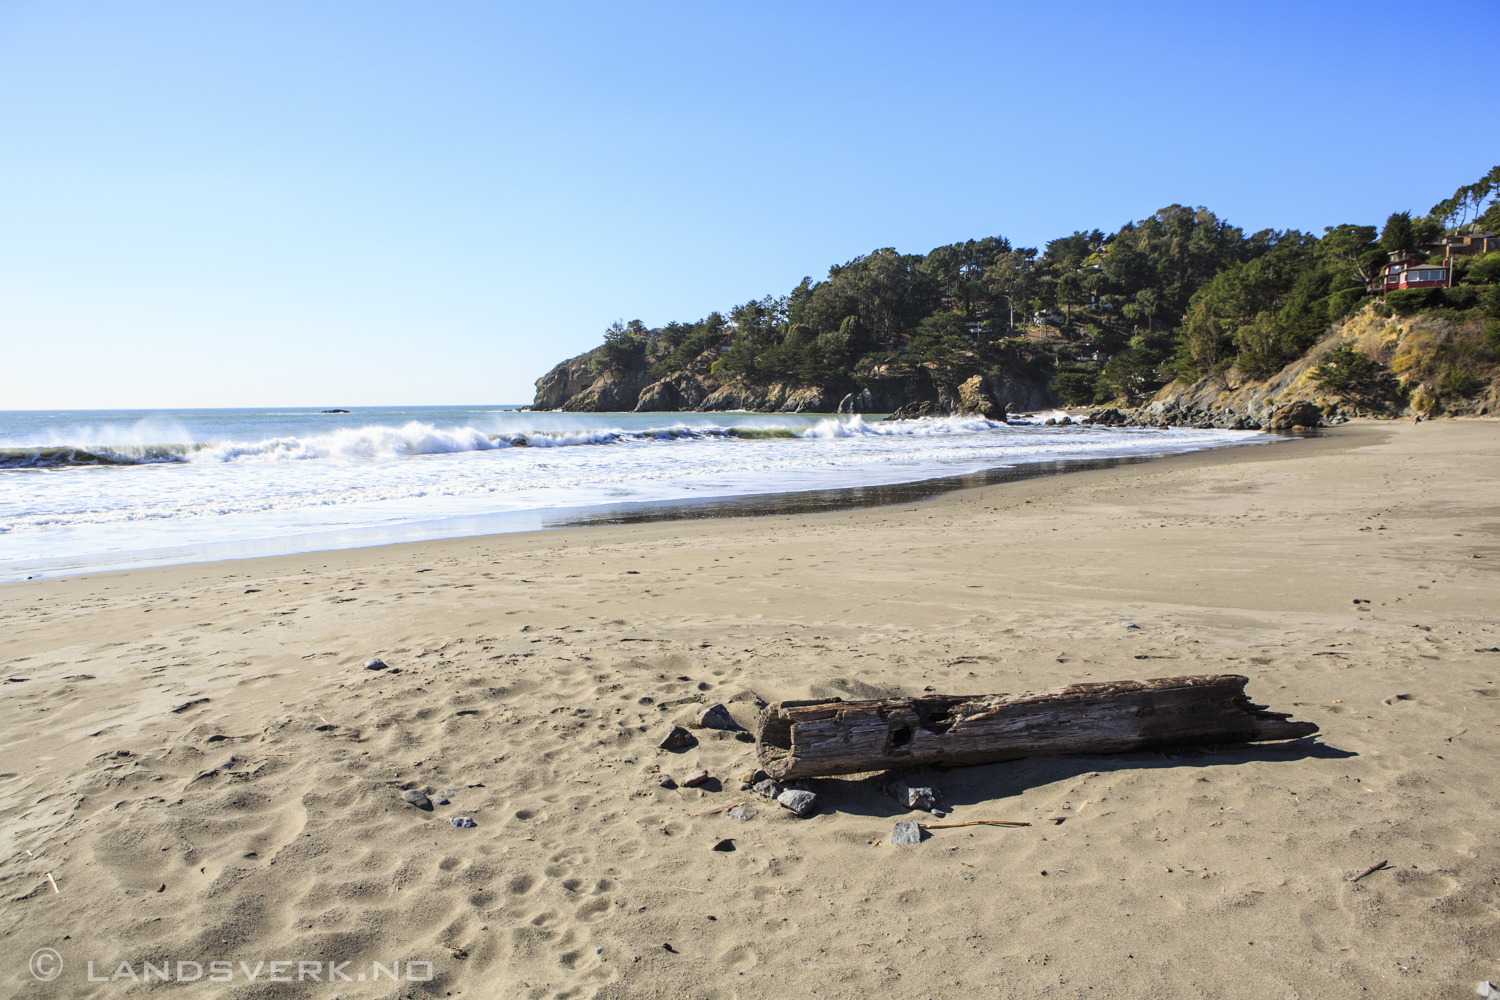 Muir Beach, California. 

(Canon EOS 5D Mark III / Canon EF 24-70mm f/2.8 L USM)